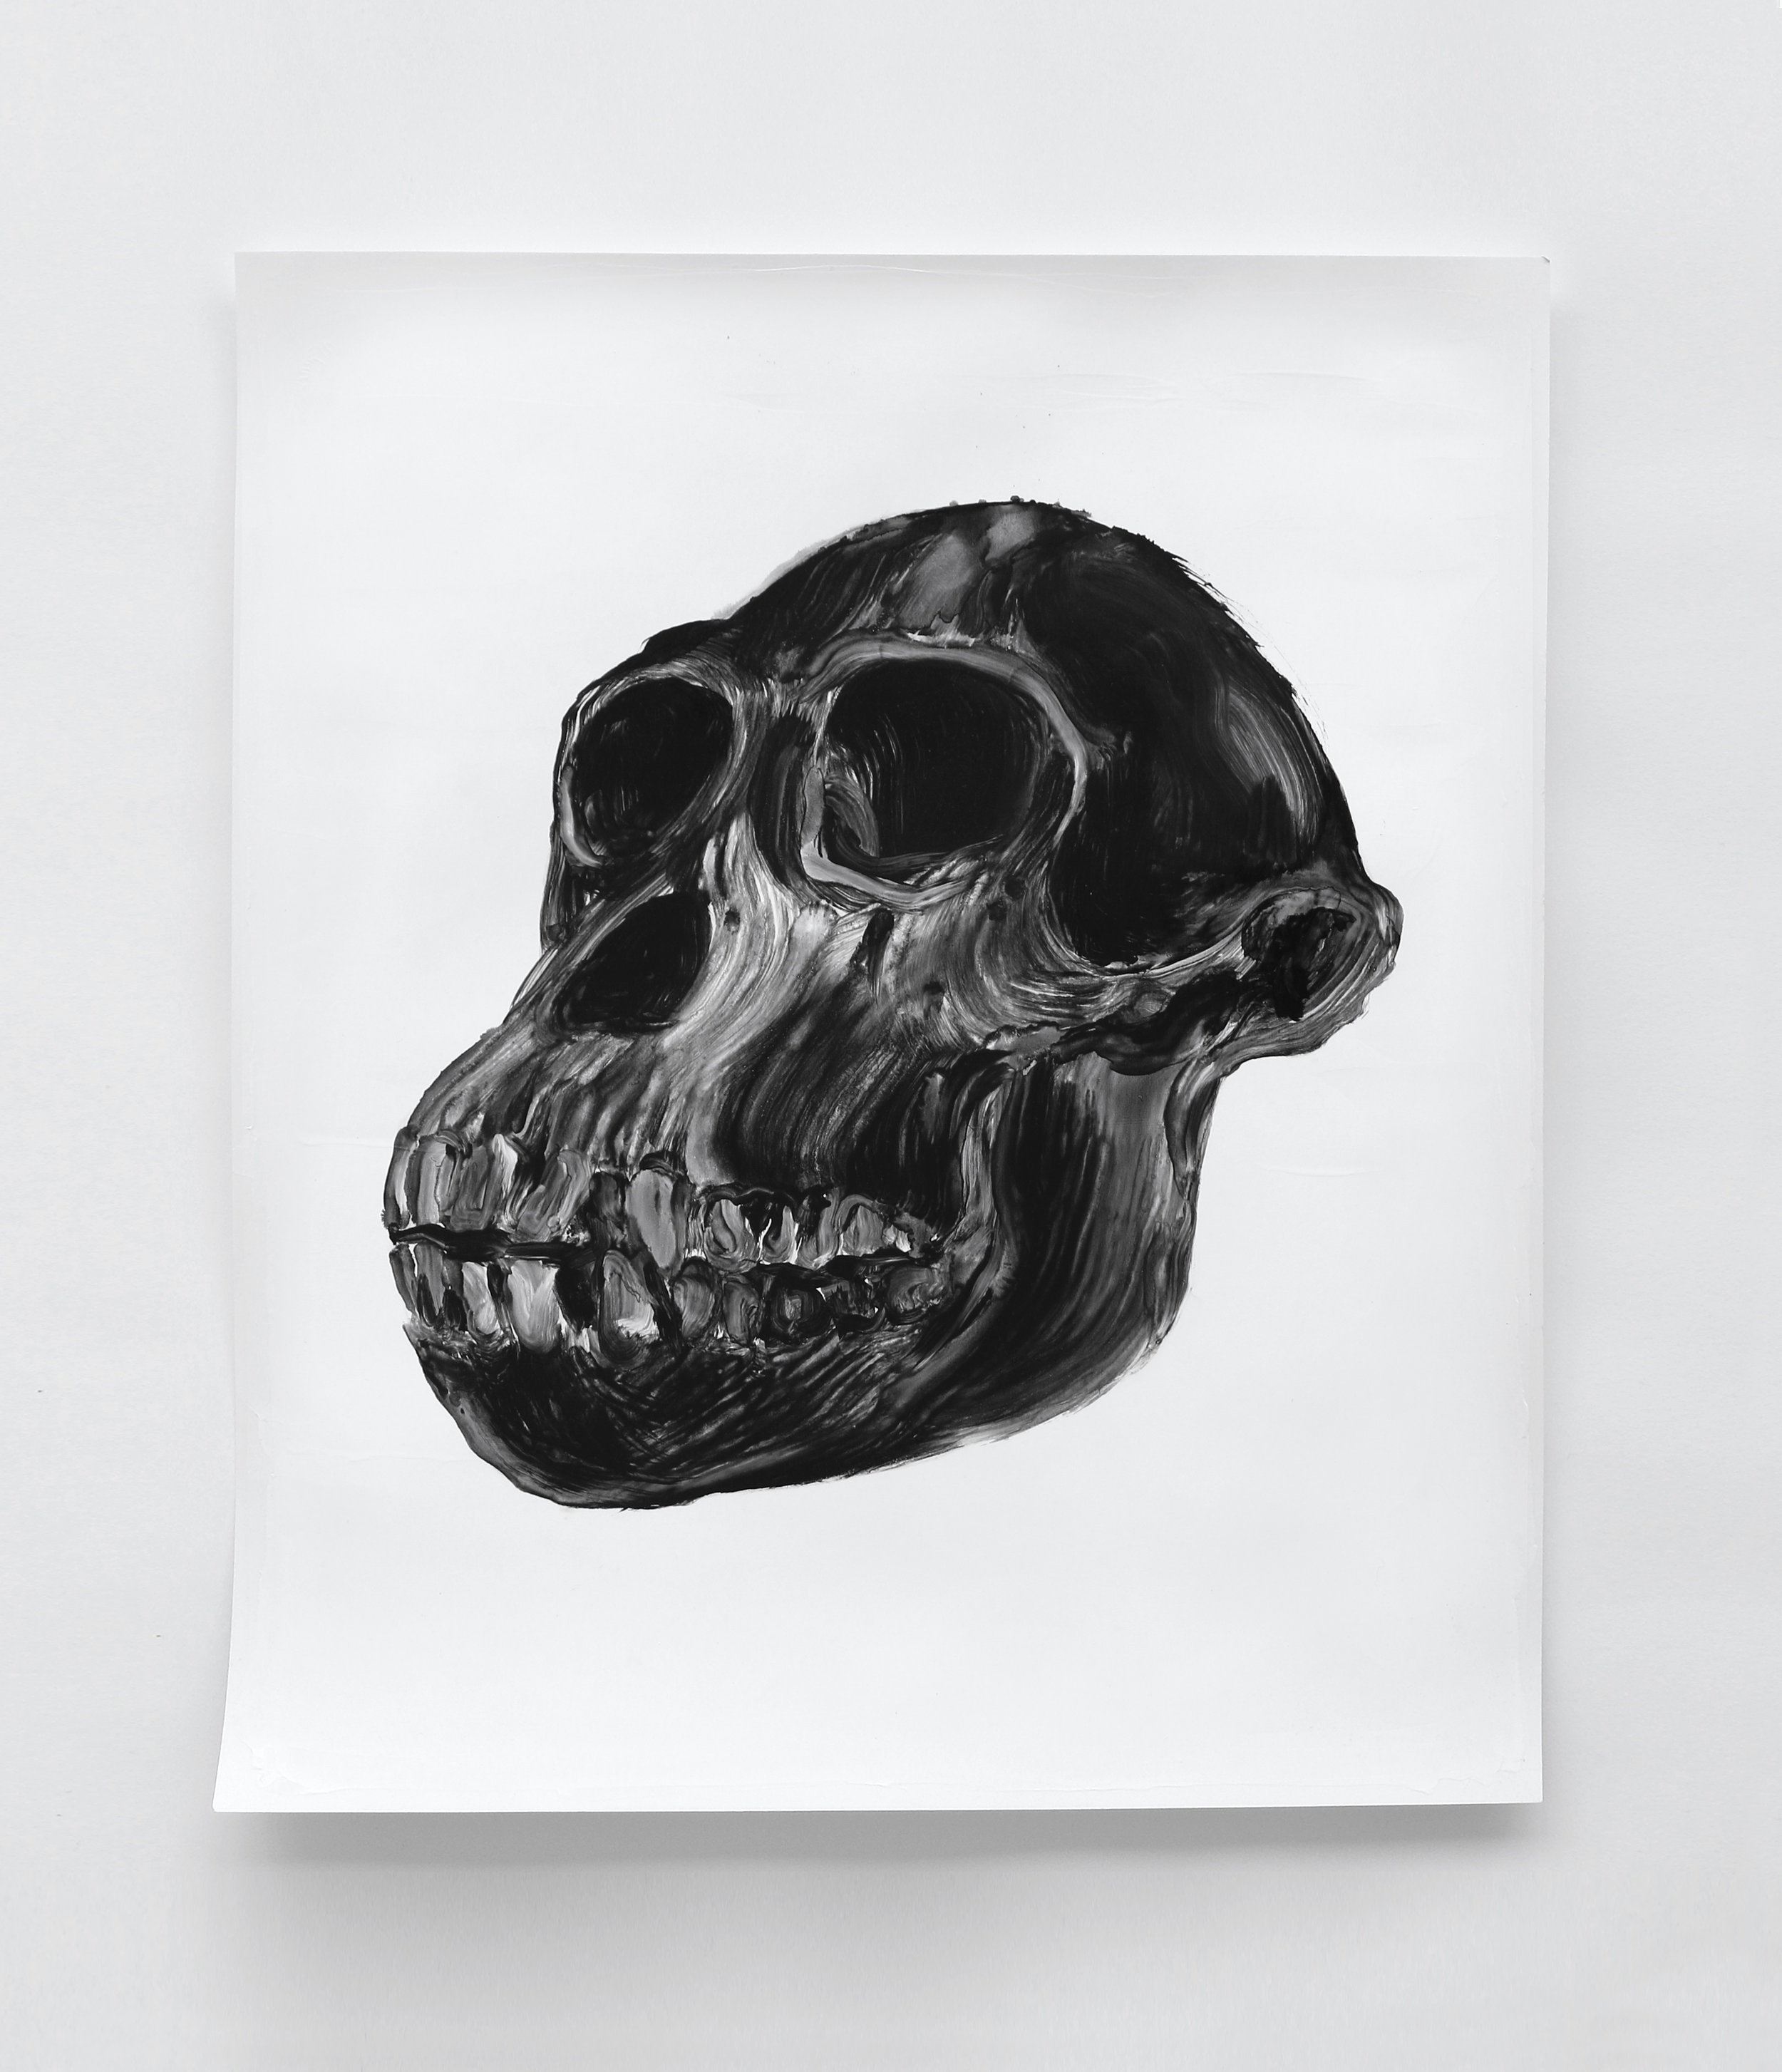  Crâne / Skull  Huile sur papier / Oil on paper  12 X 16 in / 30 X 40 cm    